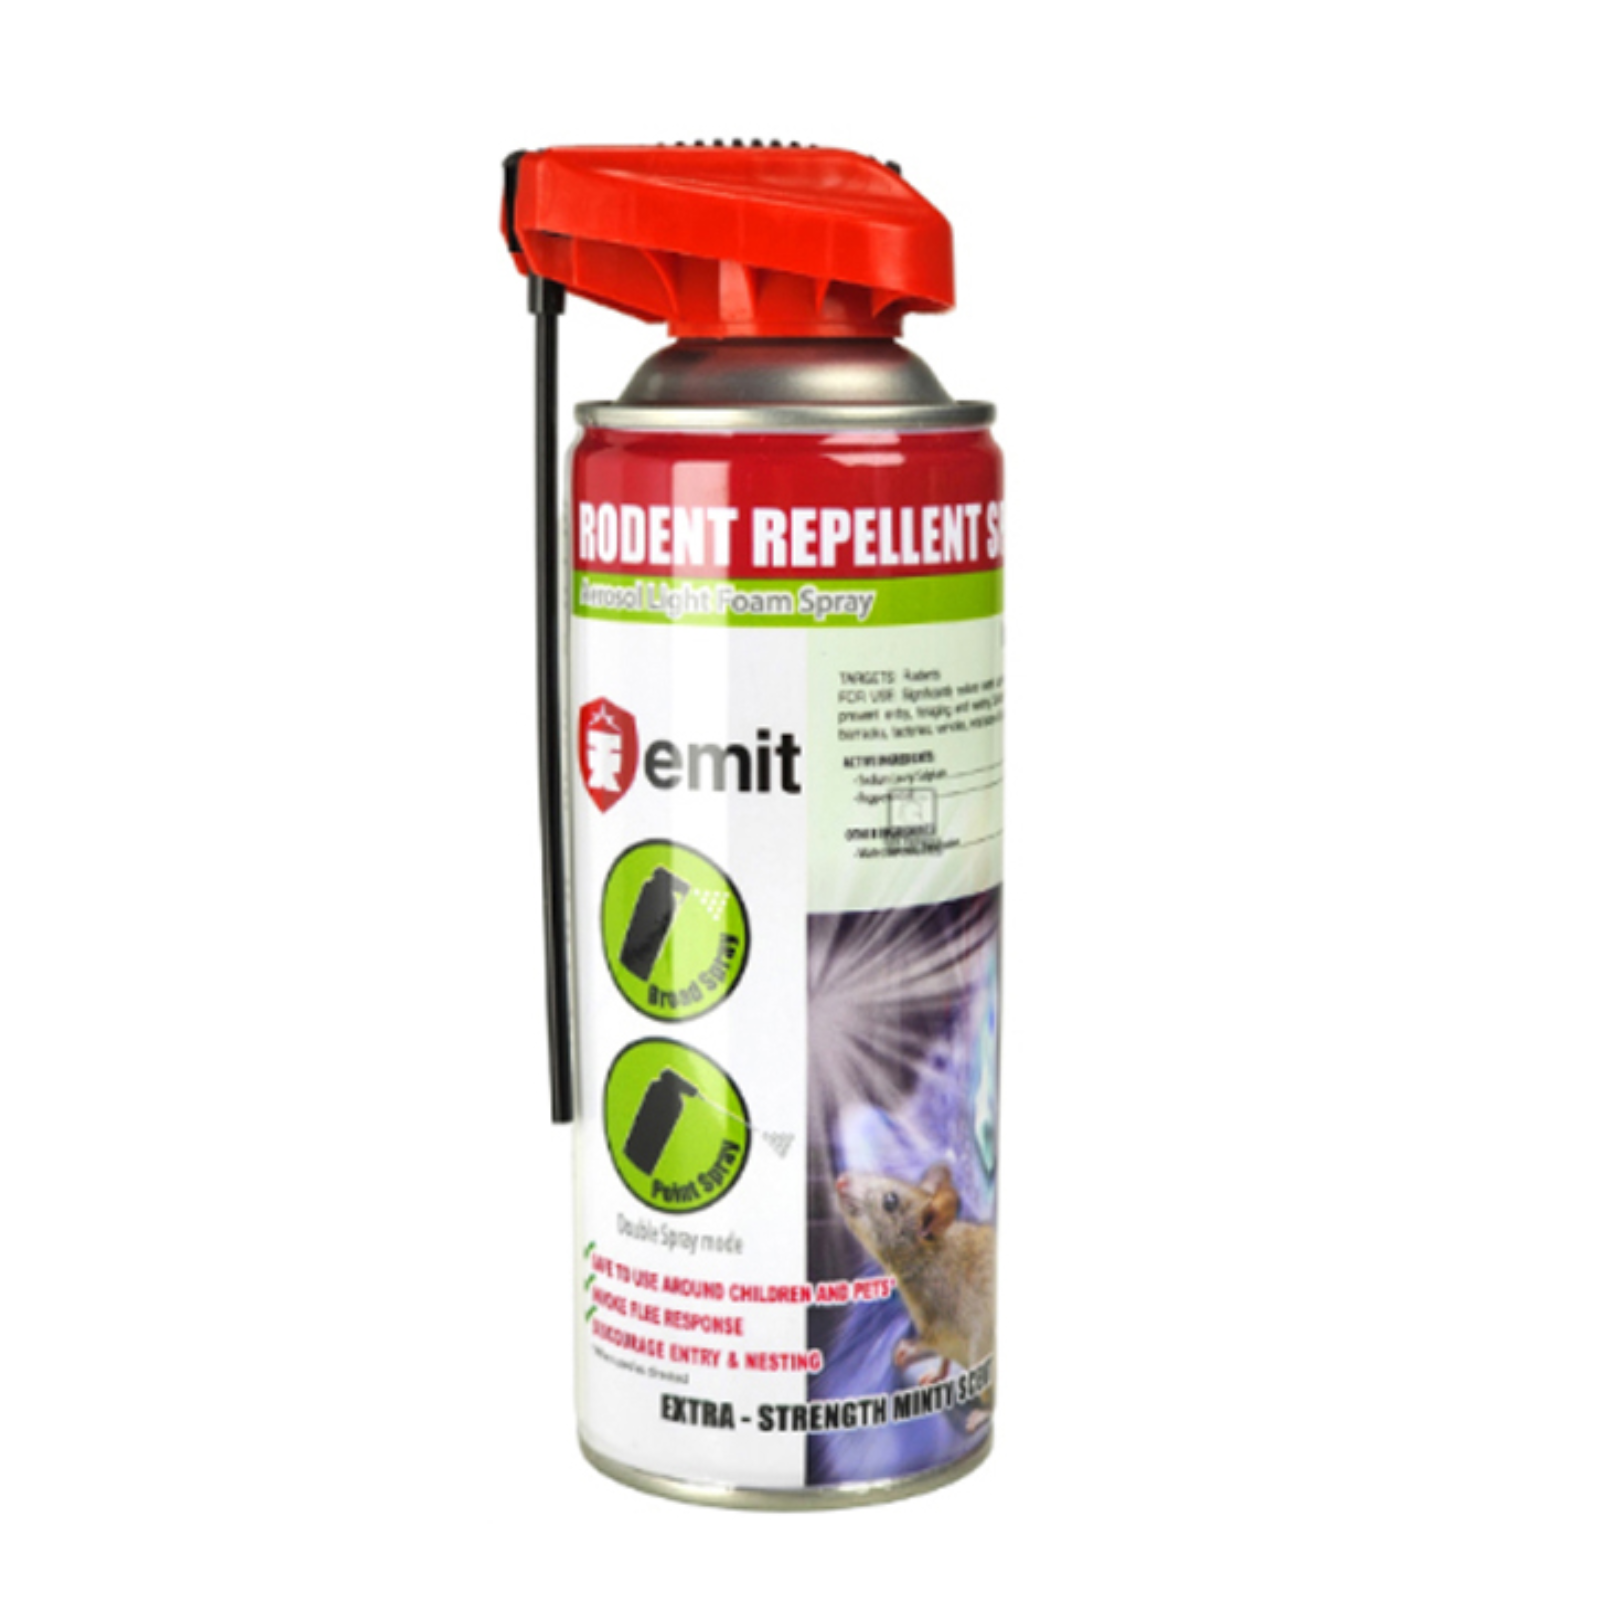 EMIT RODENT Repellent Aerosol Spray Light Foam 450ML EXTRA MINTY SCENT